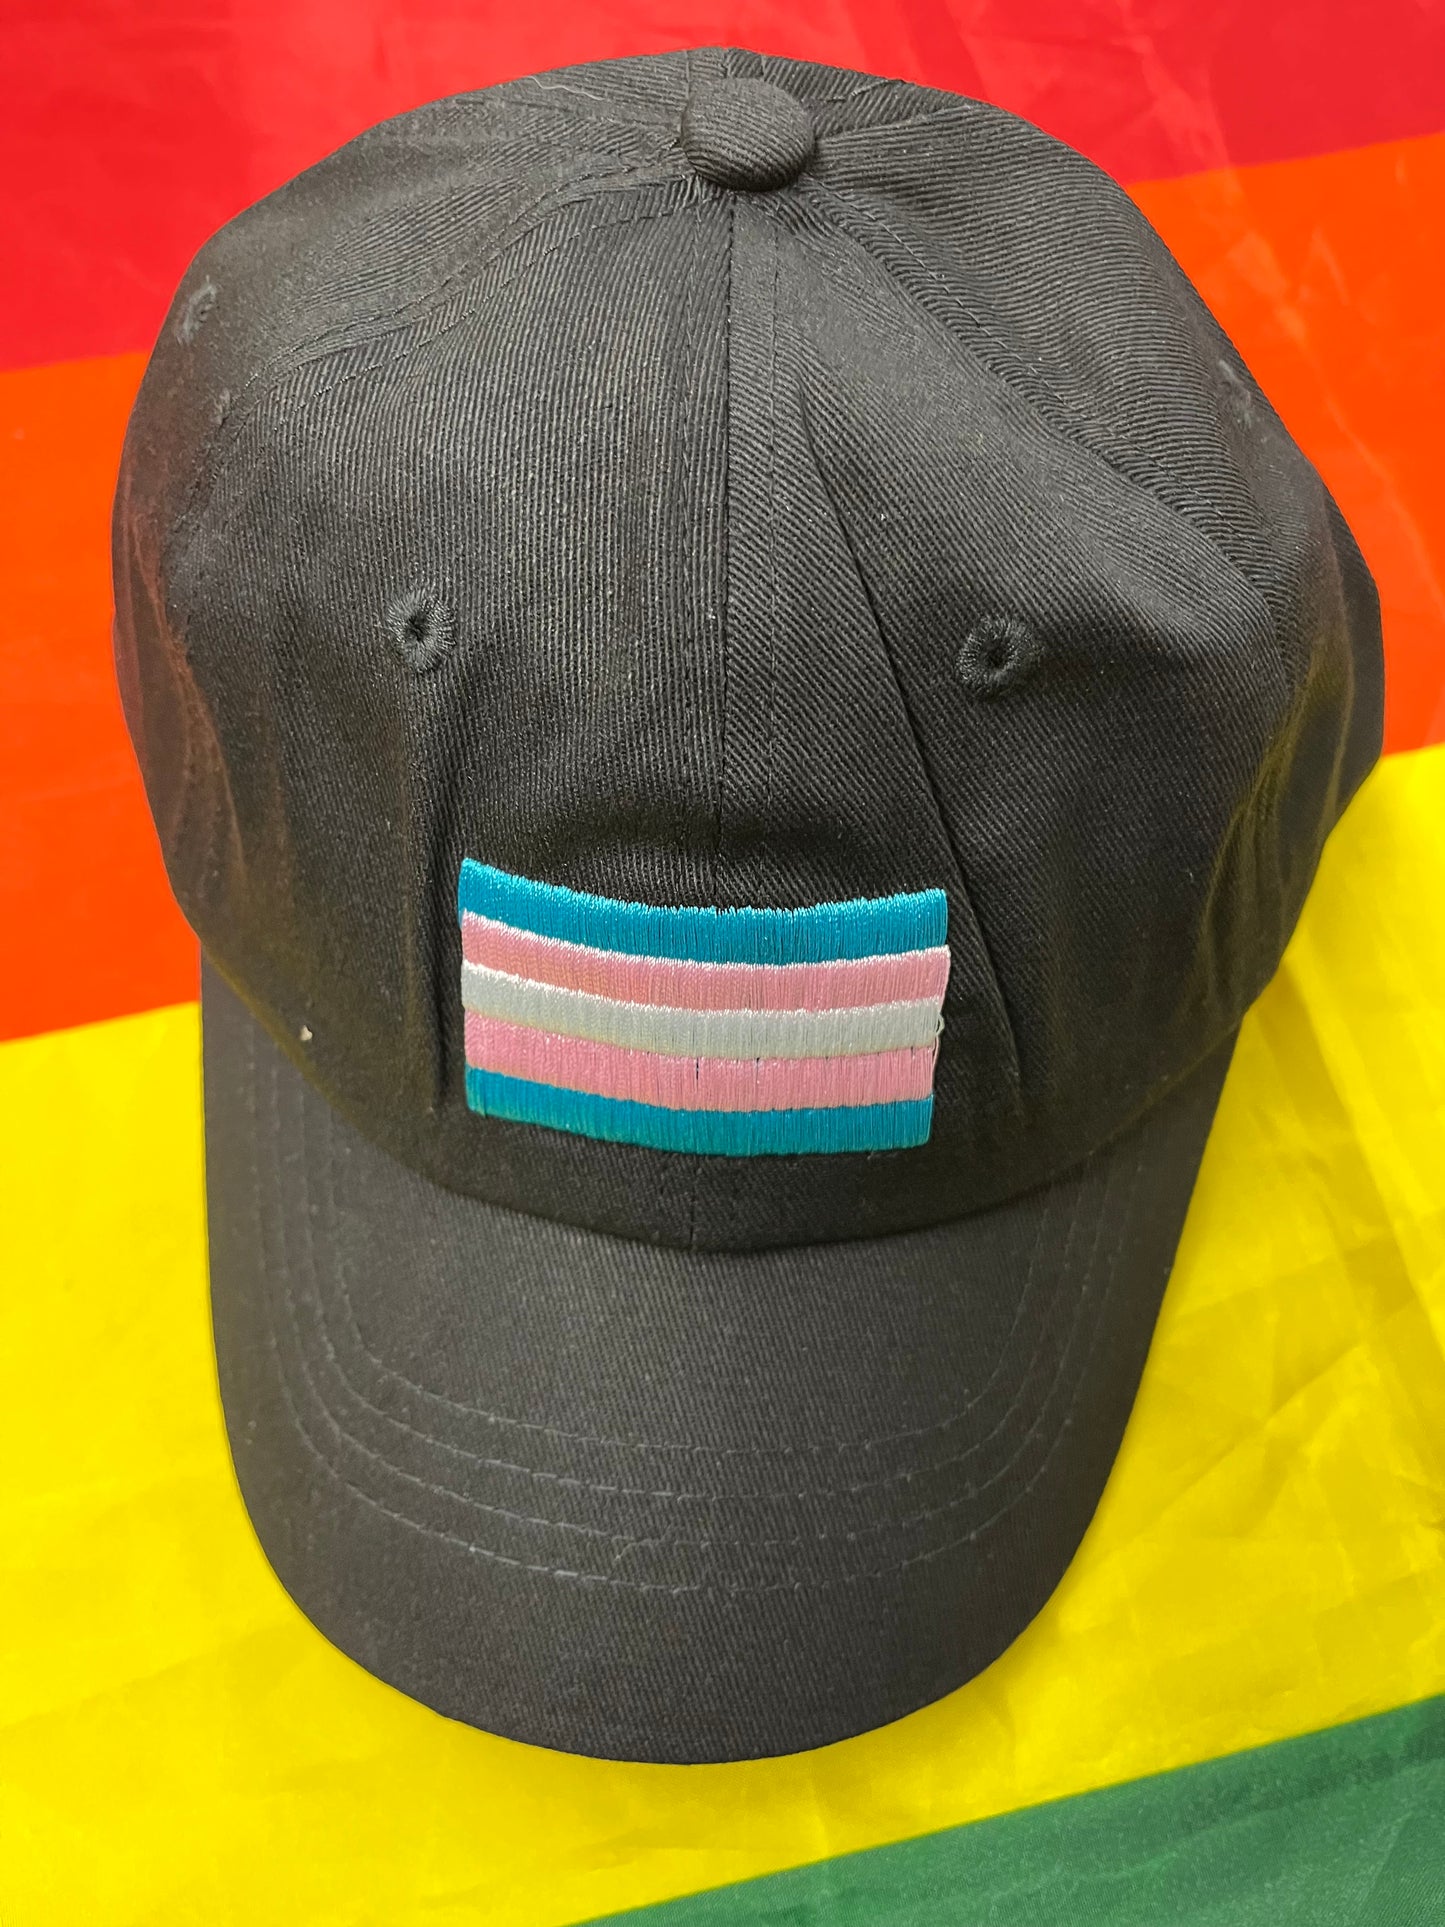 Trans Pride Hat